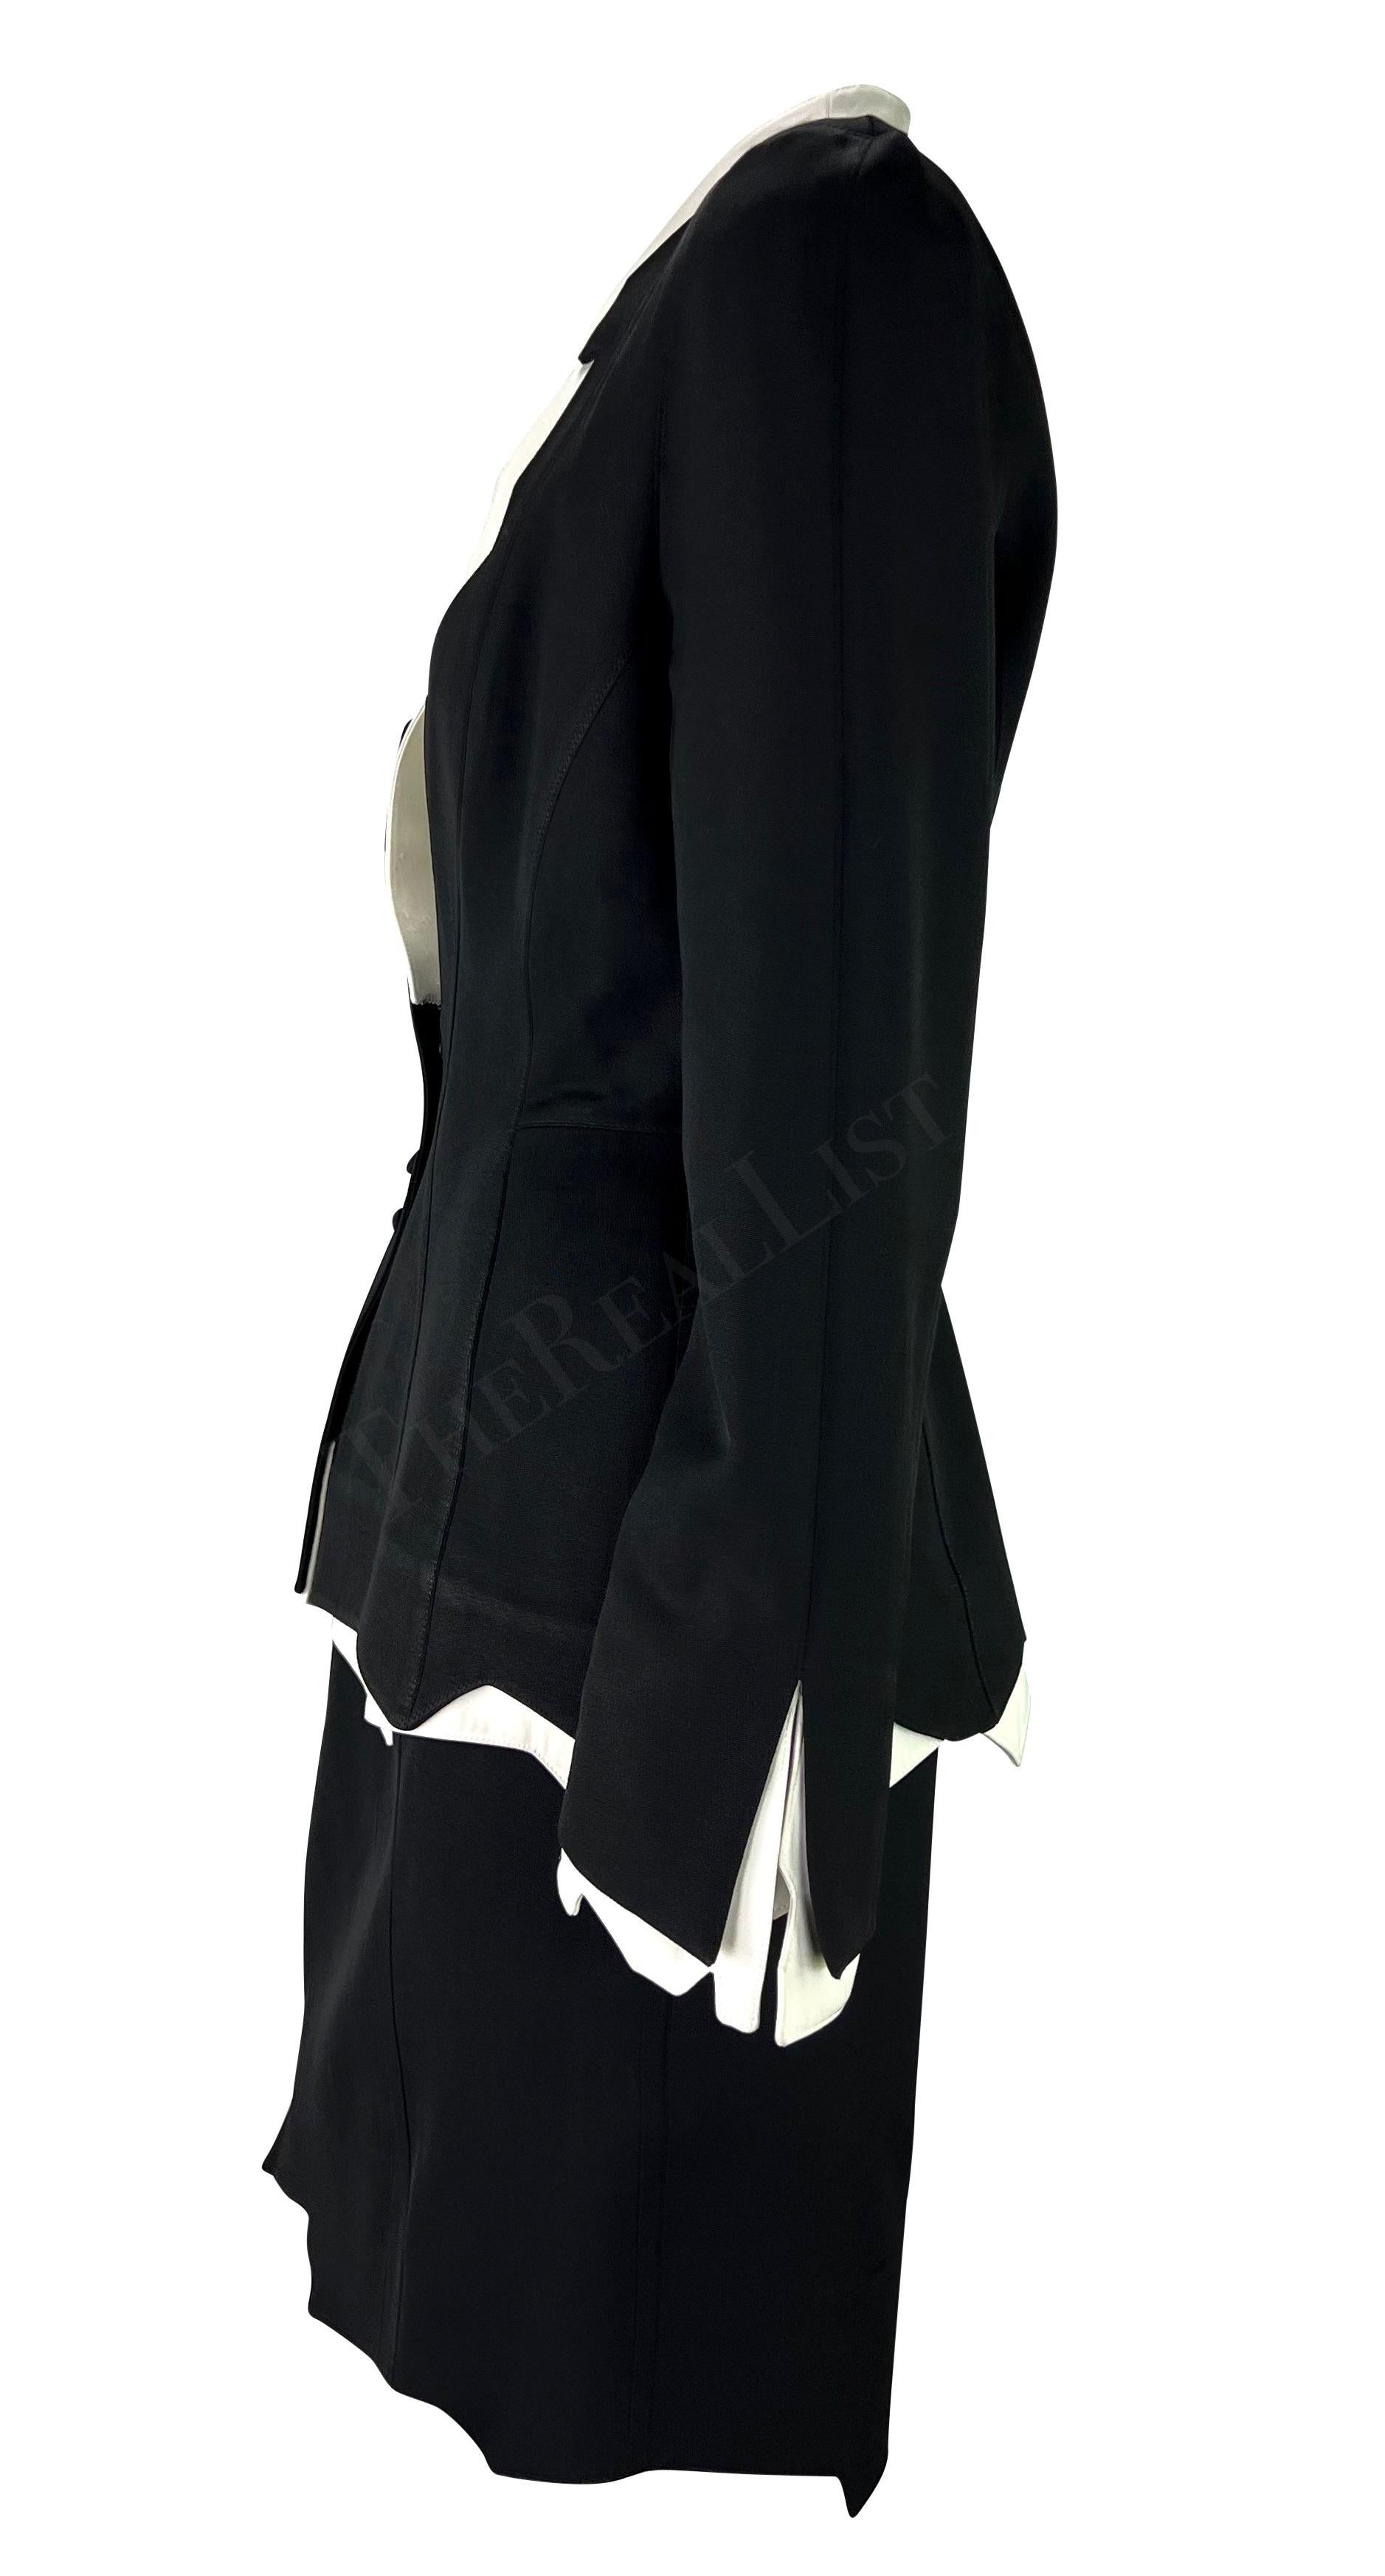 Women's S/S 1994 Thierry Mugler Black White Sculptural Skirt Suit